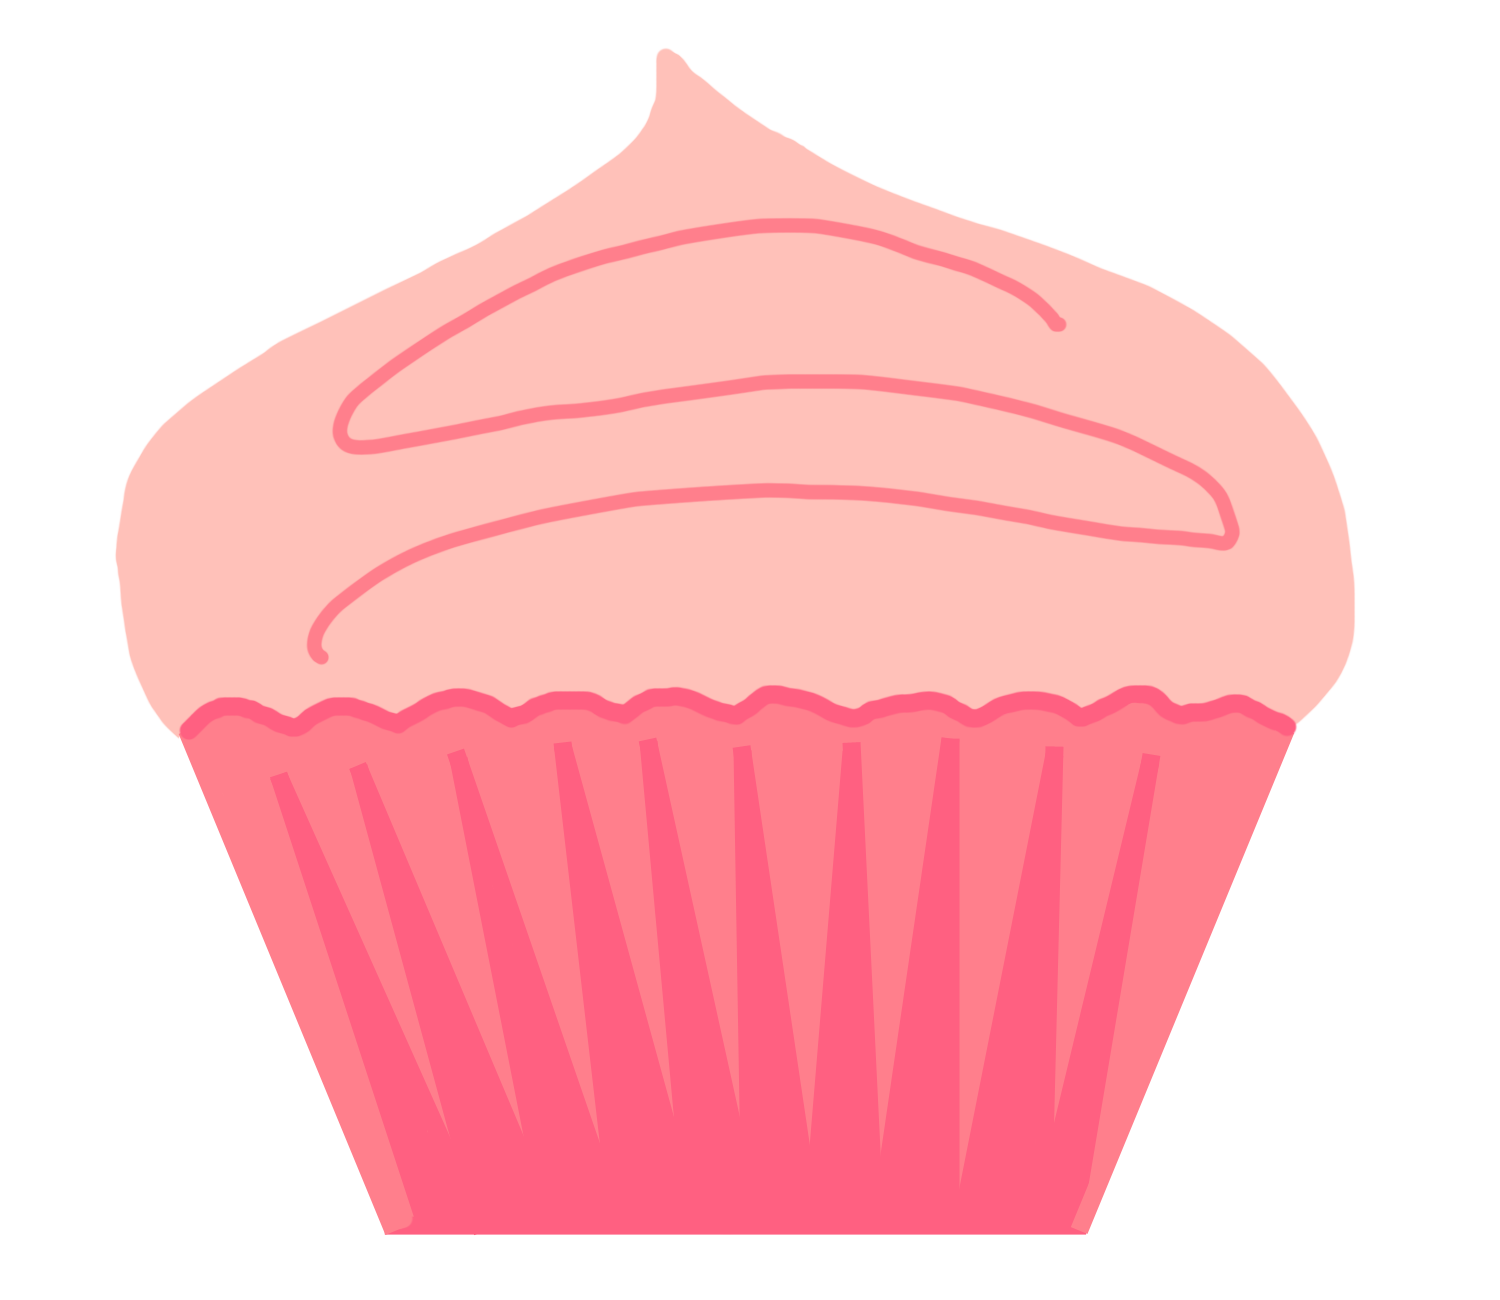 Cute Cupcake Outline Clipart